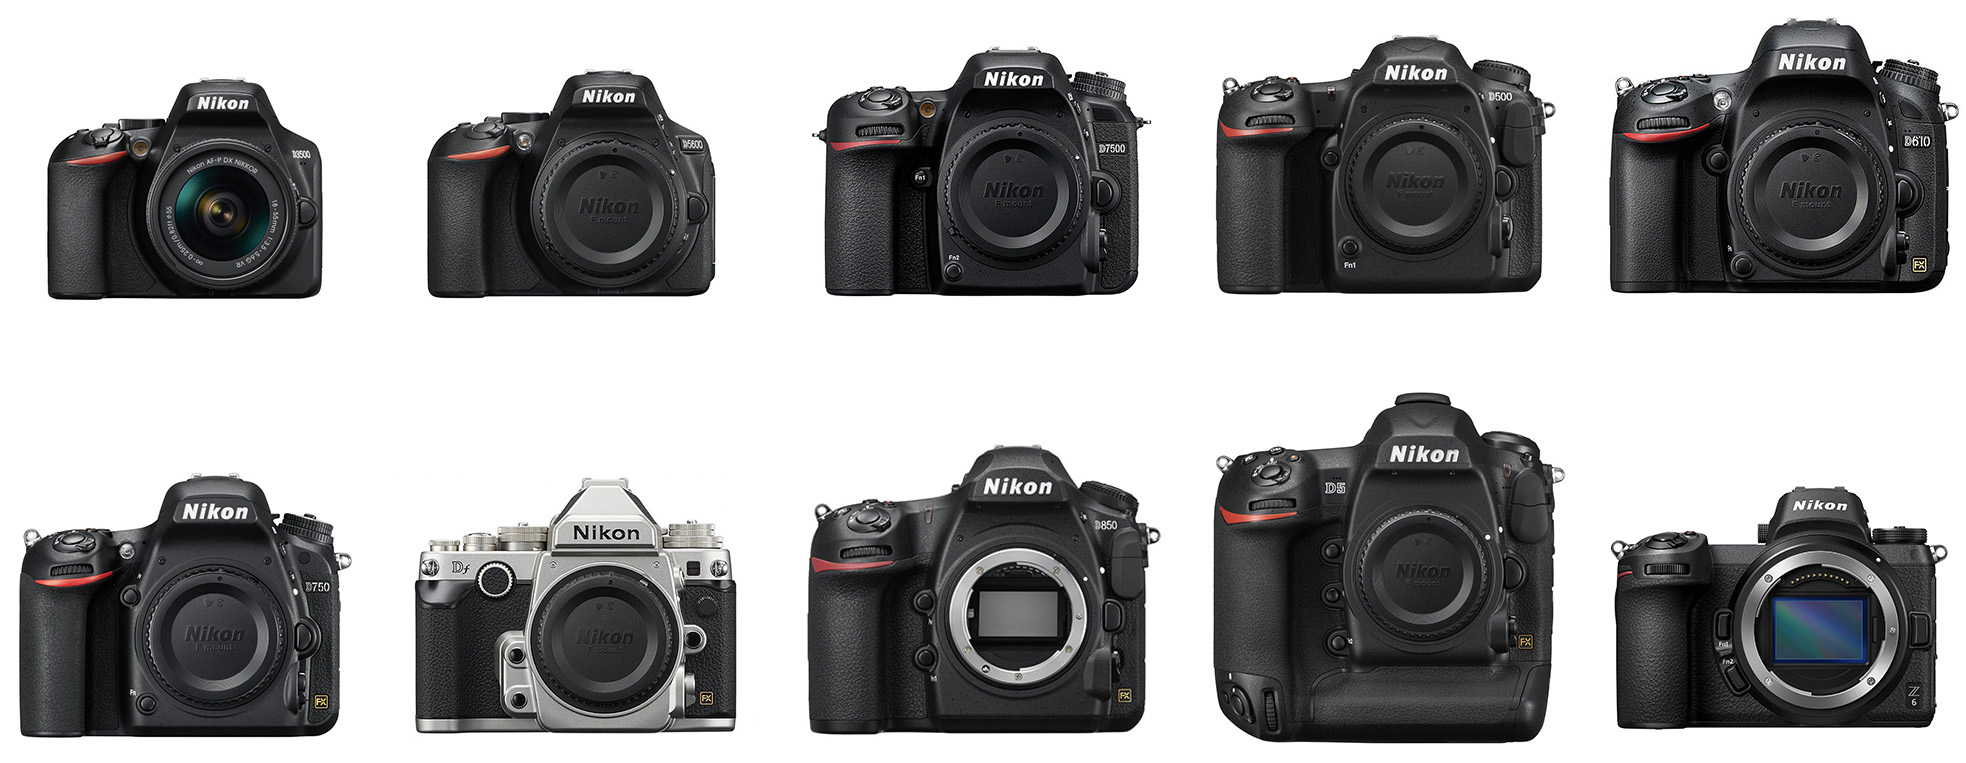 Nikon Digital Camera Comparison Chart